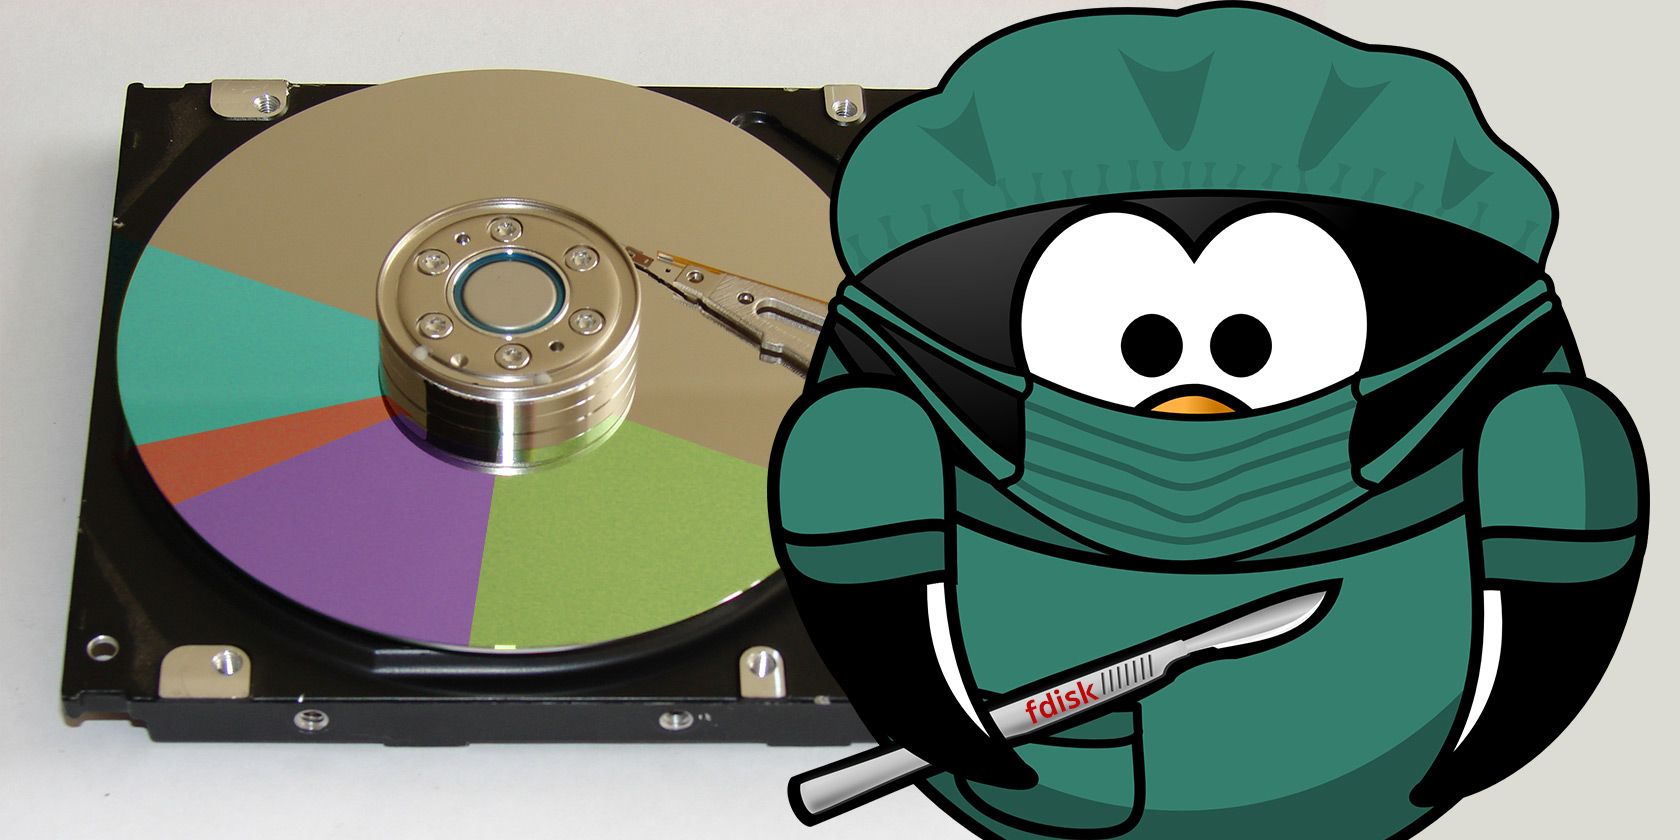 disk image creator linux